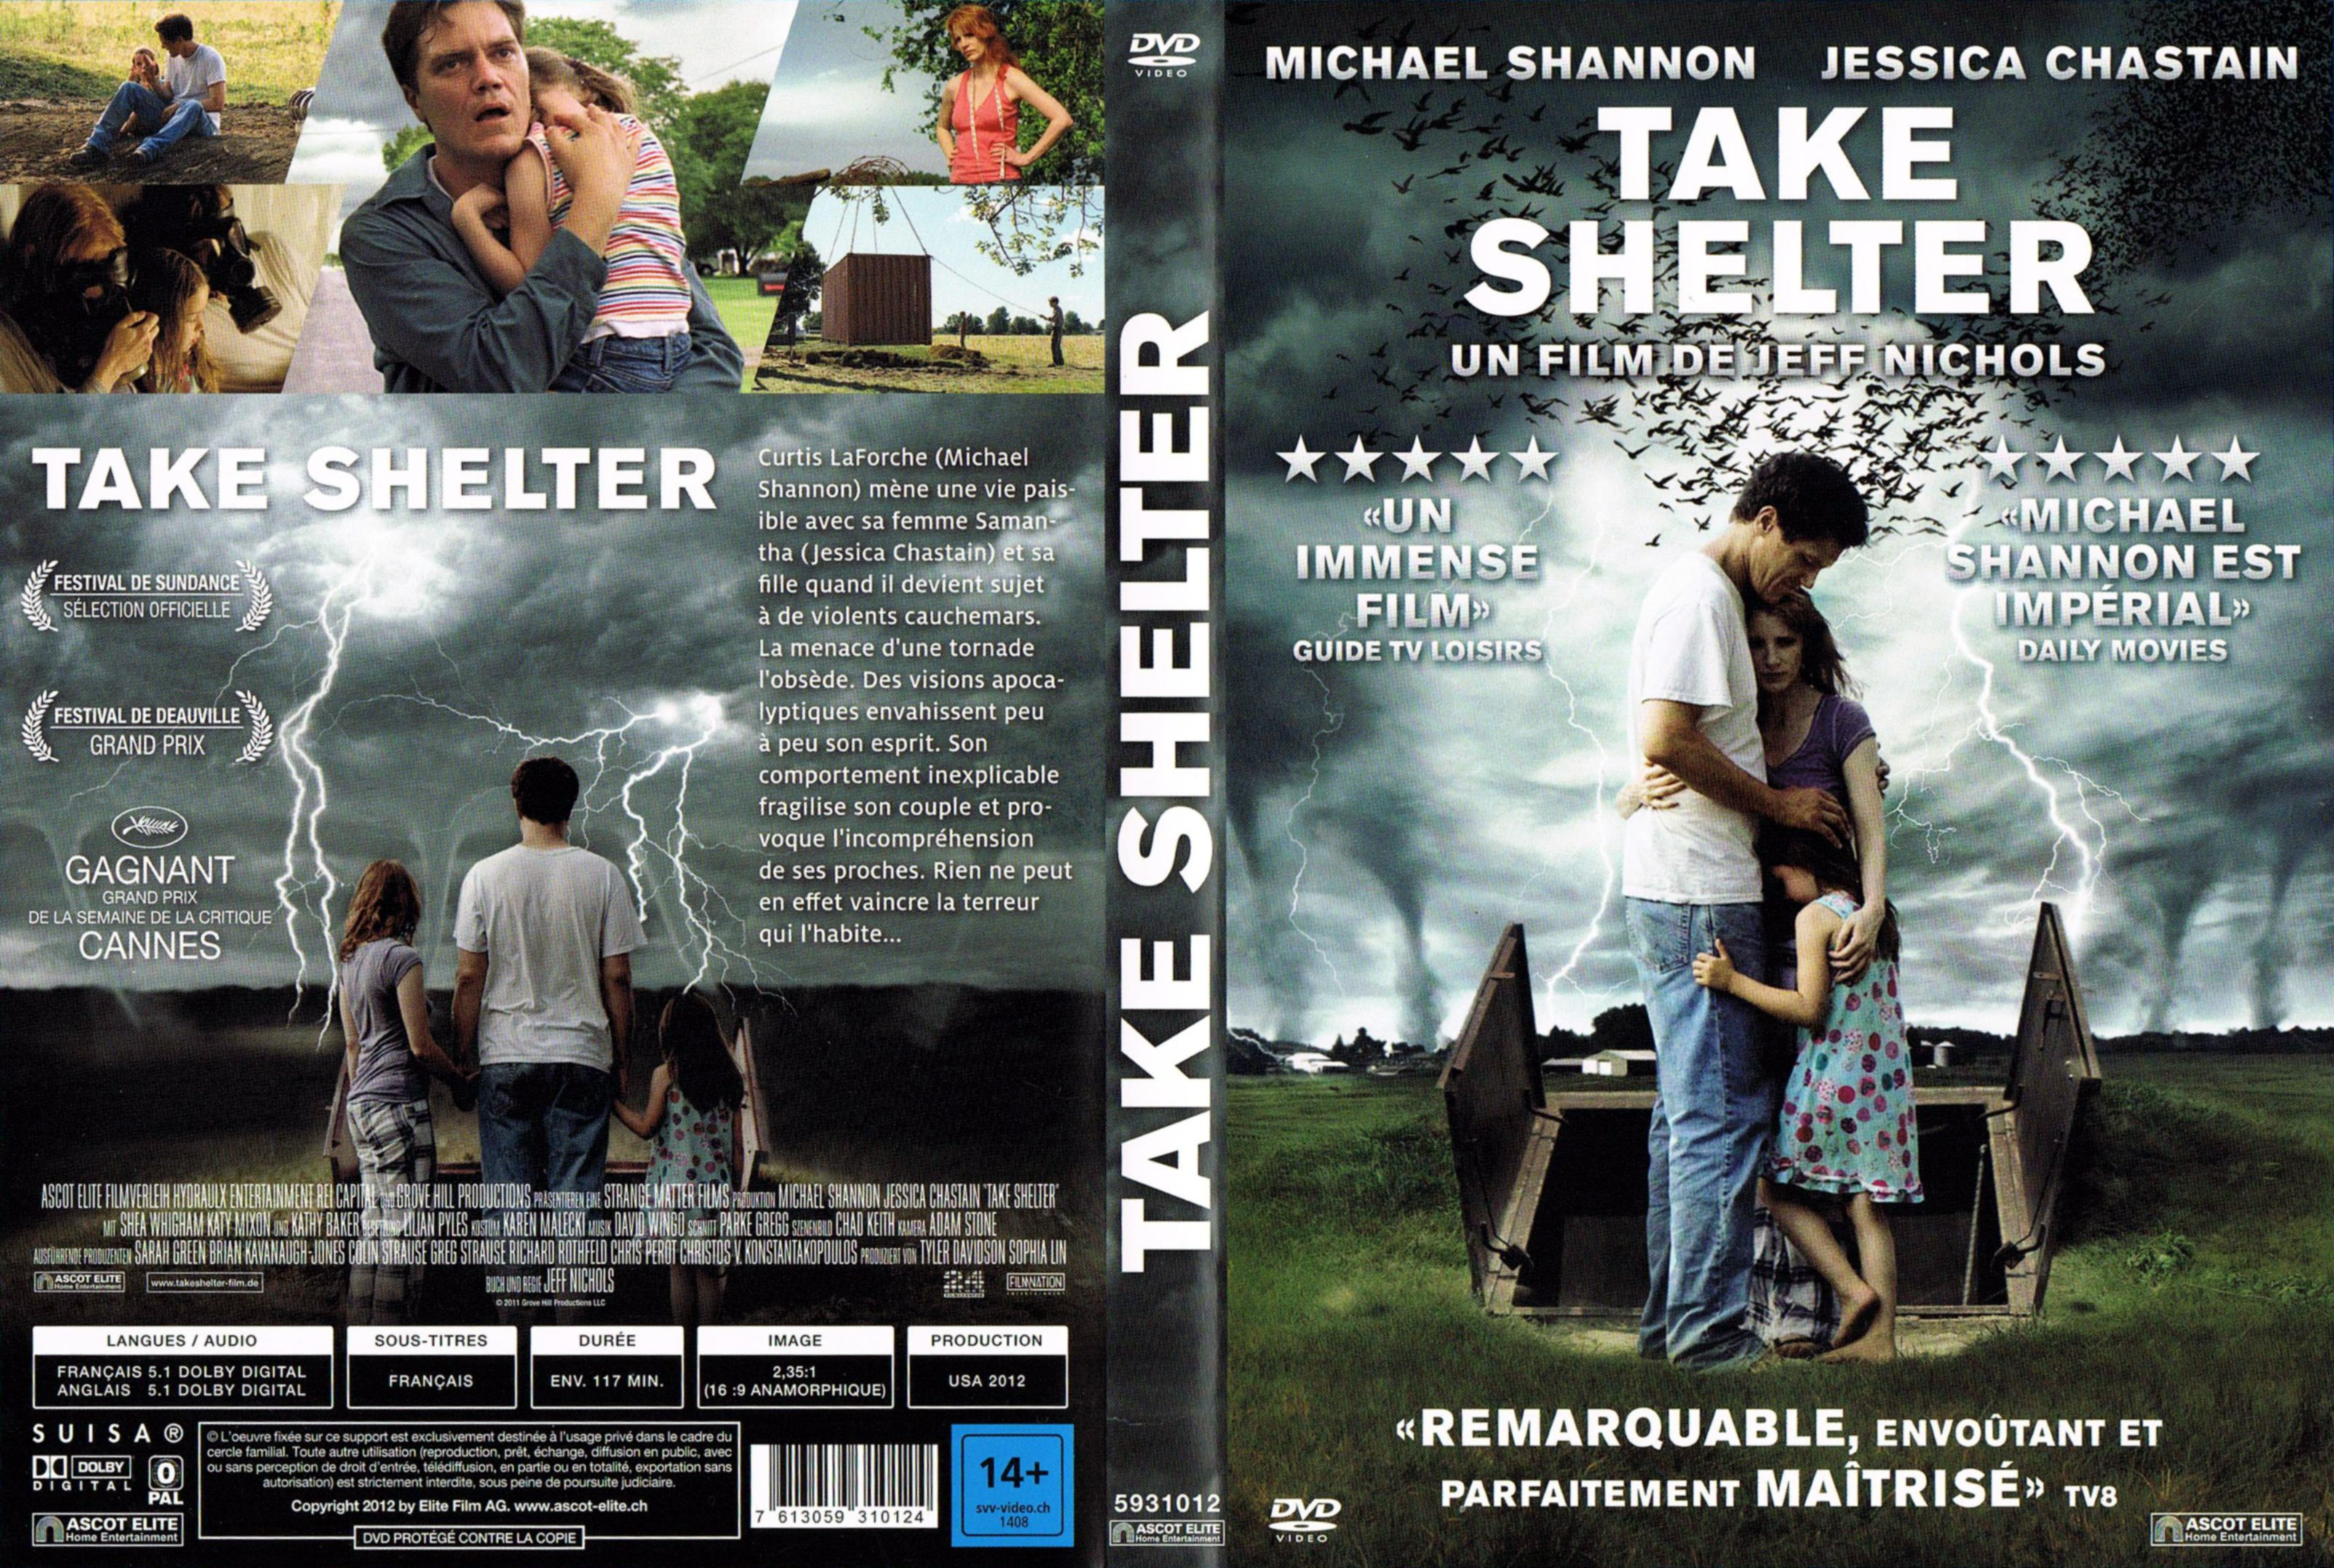 Jaquette DVD Take shelter